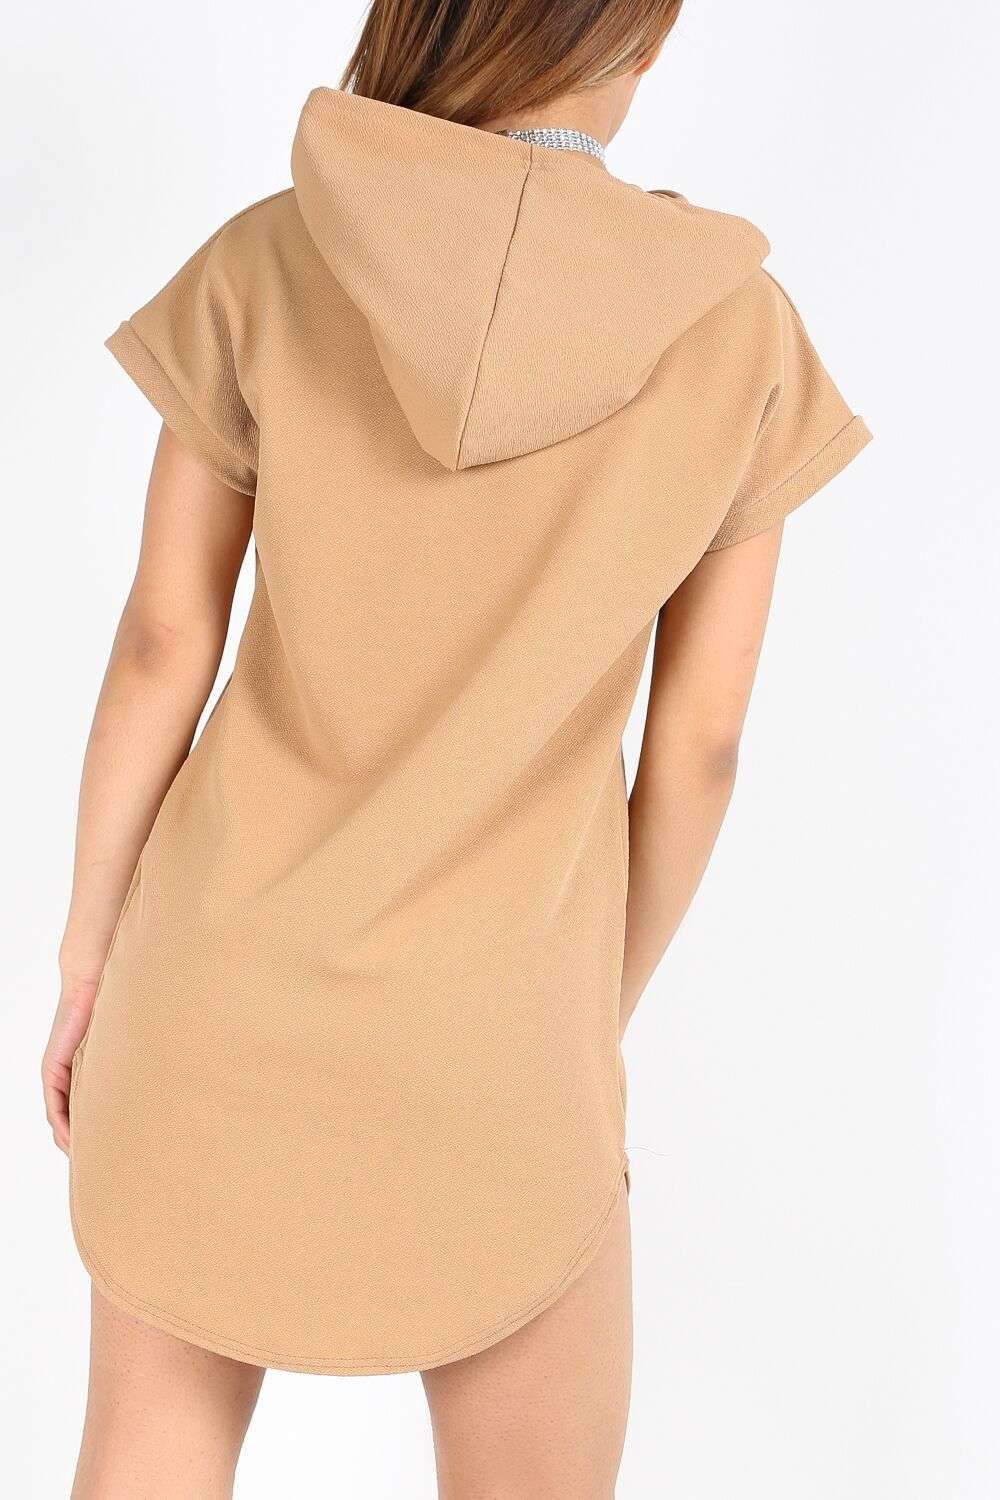 Prisca Hooded Sweater Dress - bejealous-com